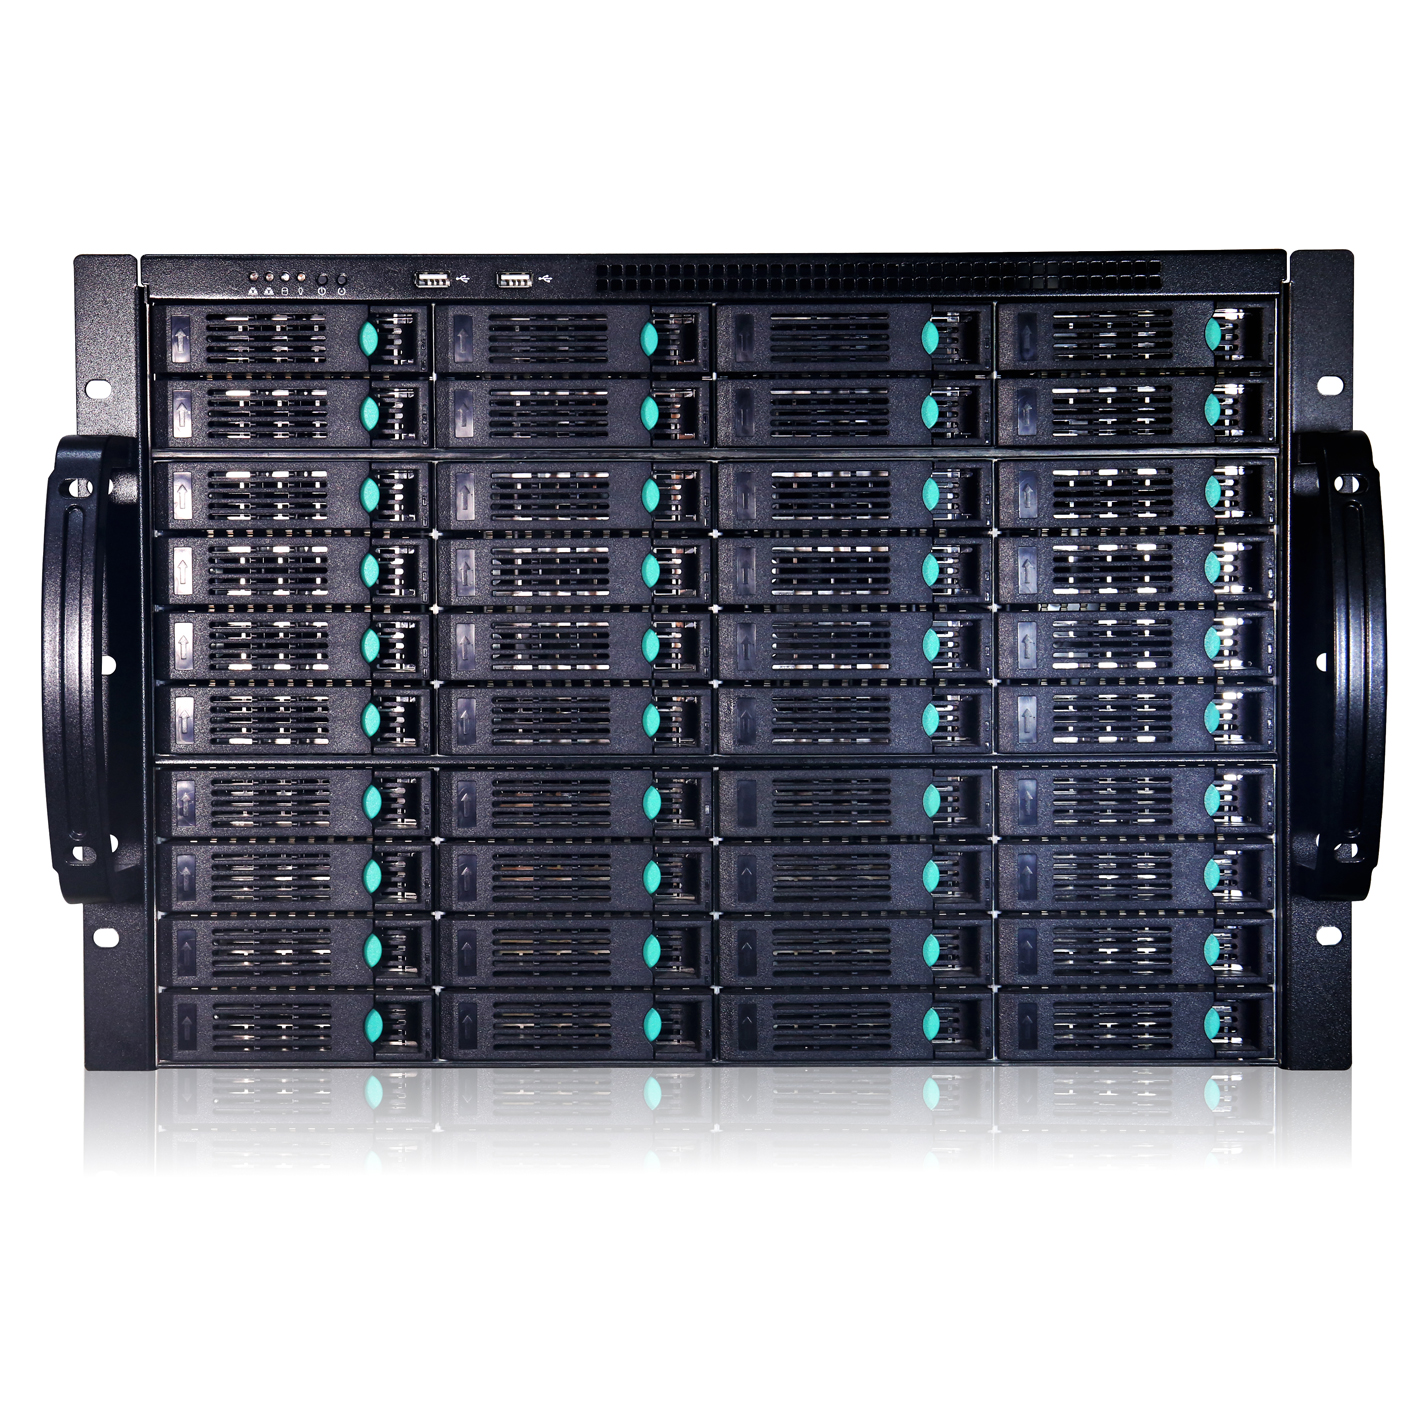 iok7U 40盤位 熱插拔服務器機箱